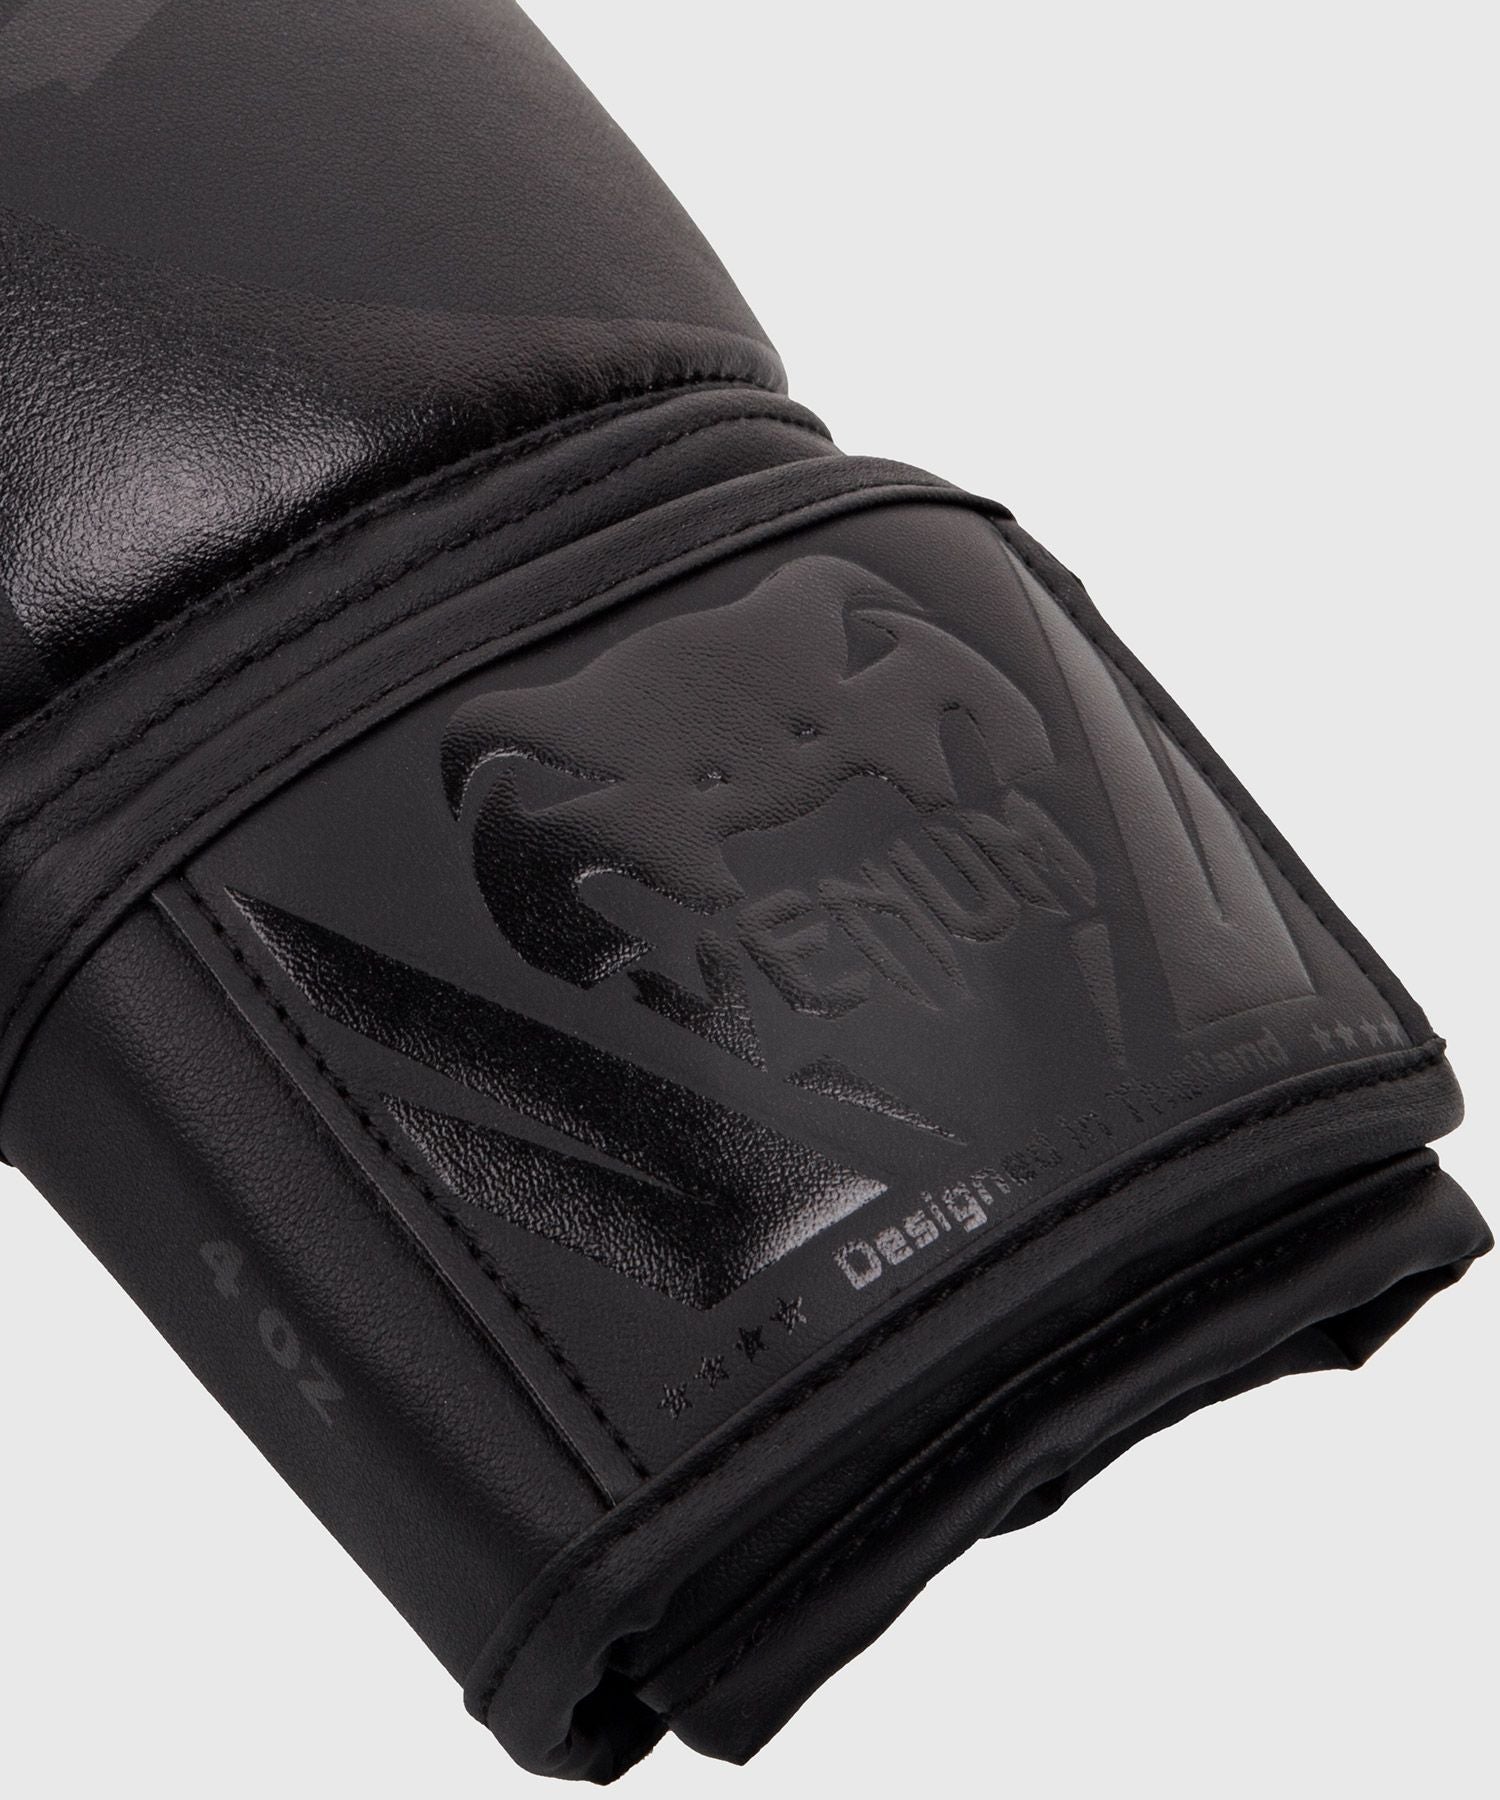 Venum Kids Boxing Gloves Challenger 2.0 - Black